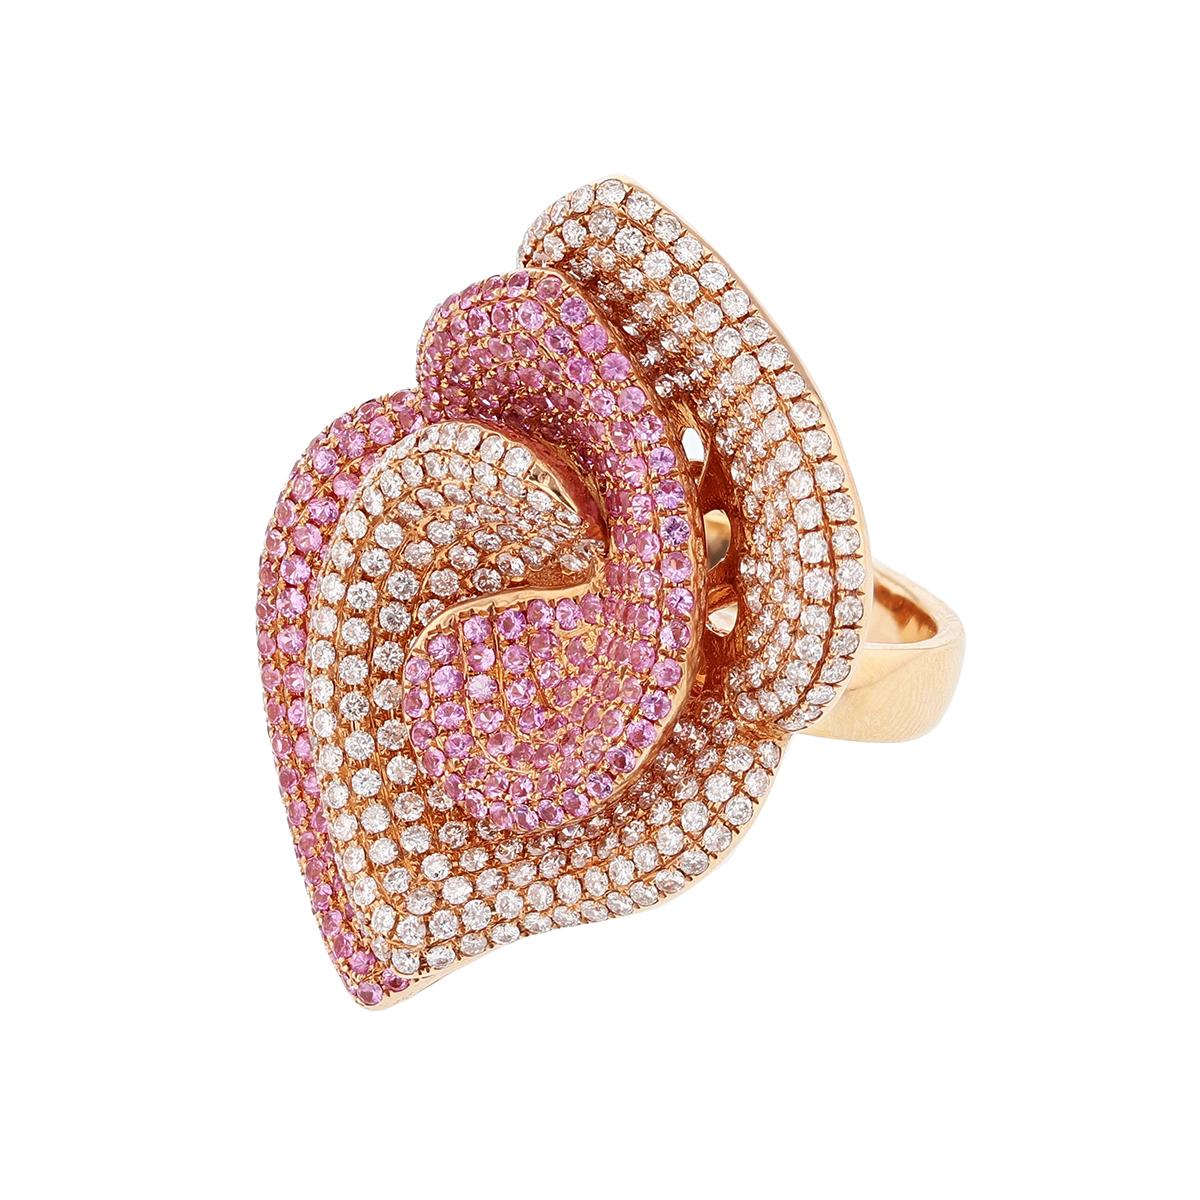 Contemporary 18 Karat Rose Gold Diamond and Pink Sapphire Ring